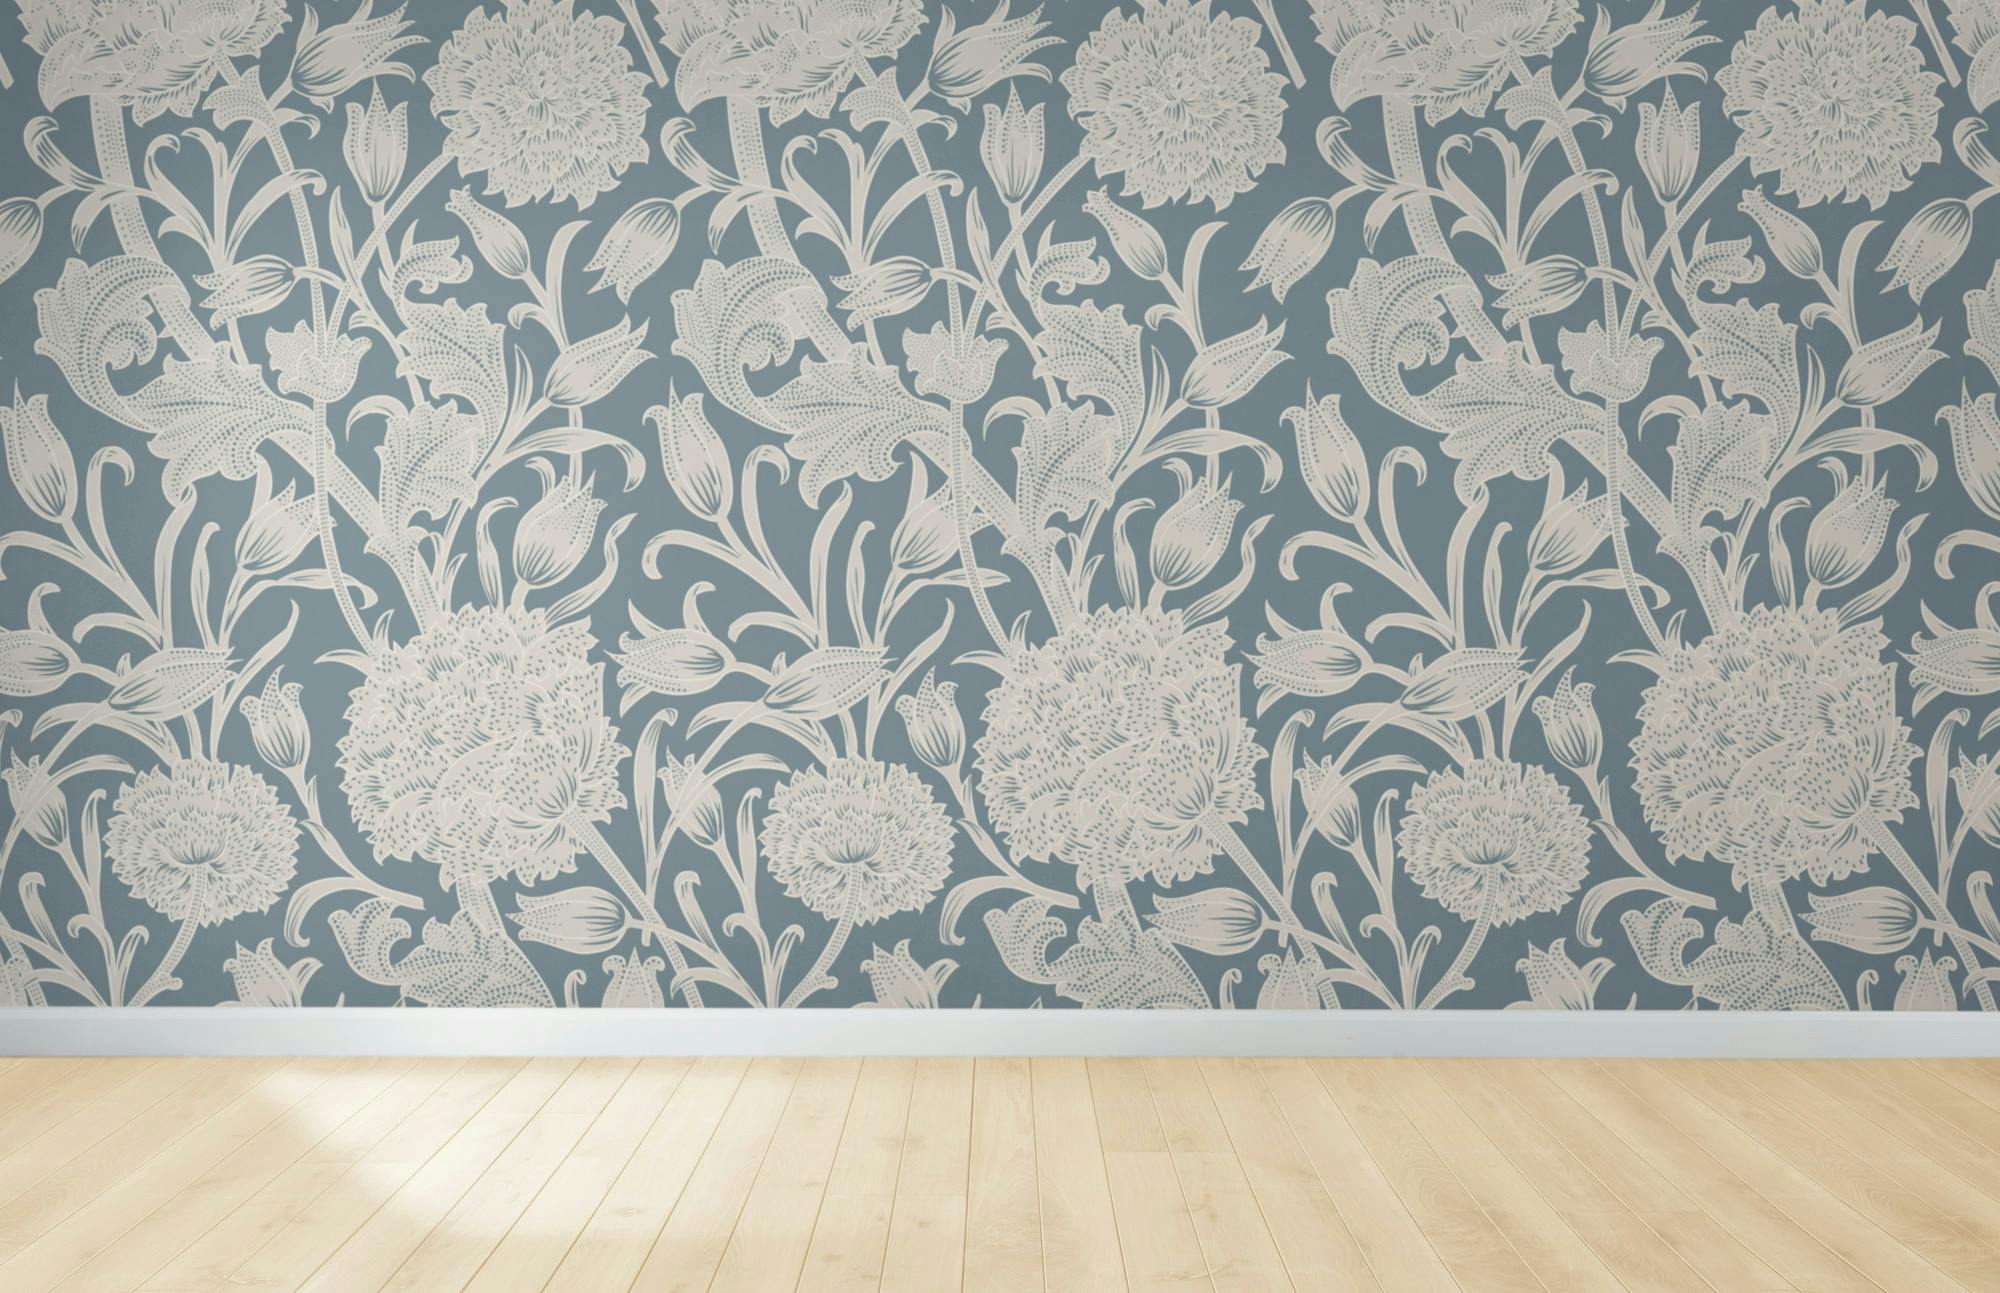 https://images.prismic.io/stylibnextjs/Zfw1js68zyqdRoXD_floral-wallpaper-empty-room-with-wooden-floor.jpg?auto=format,compress